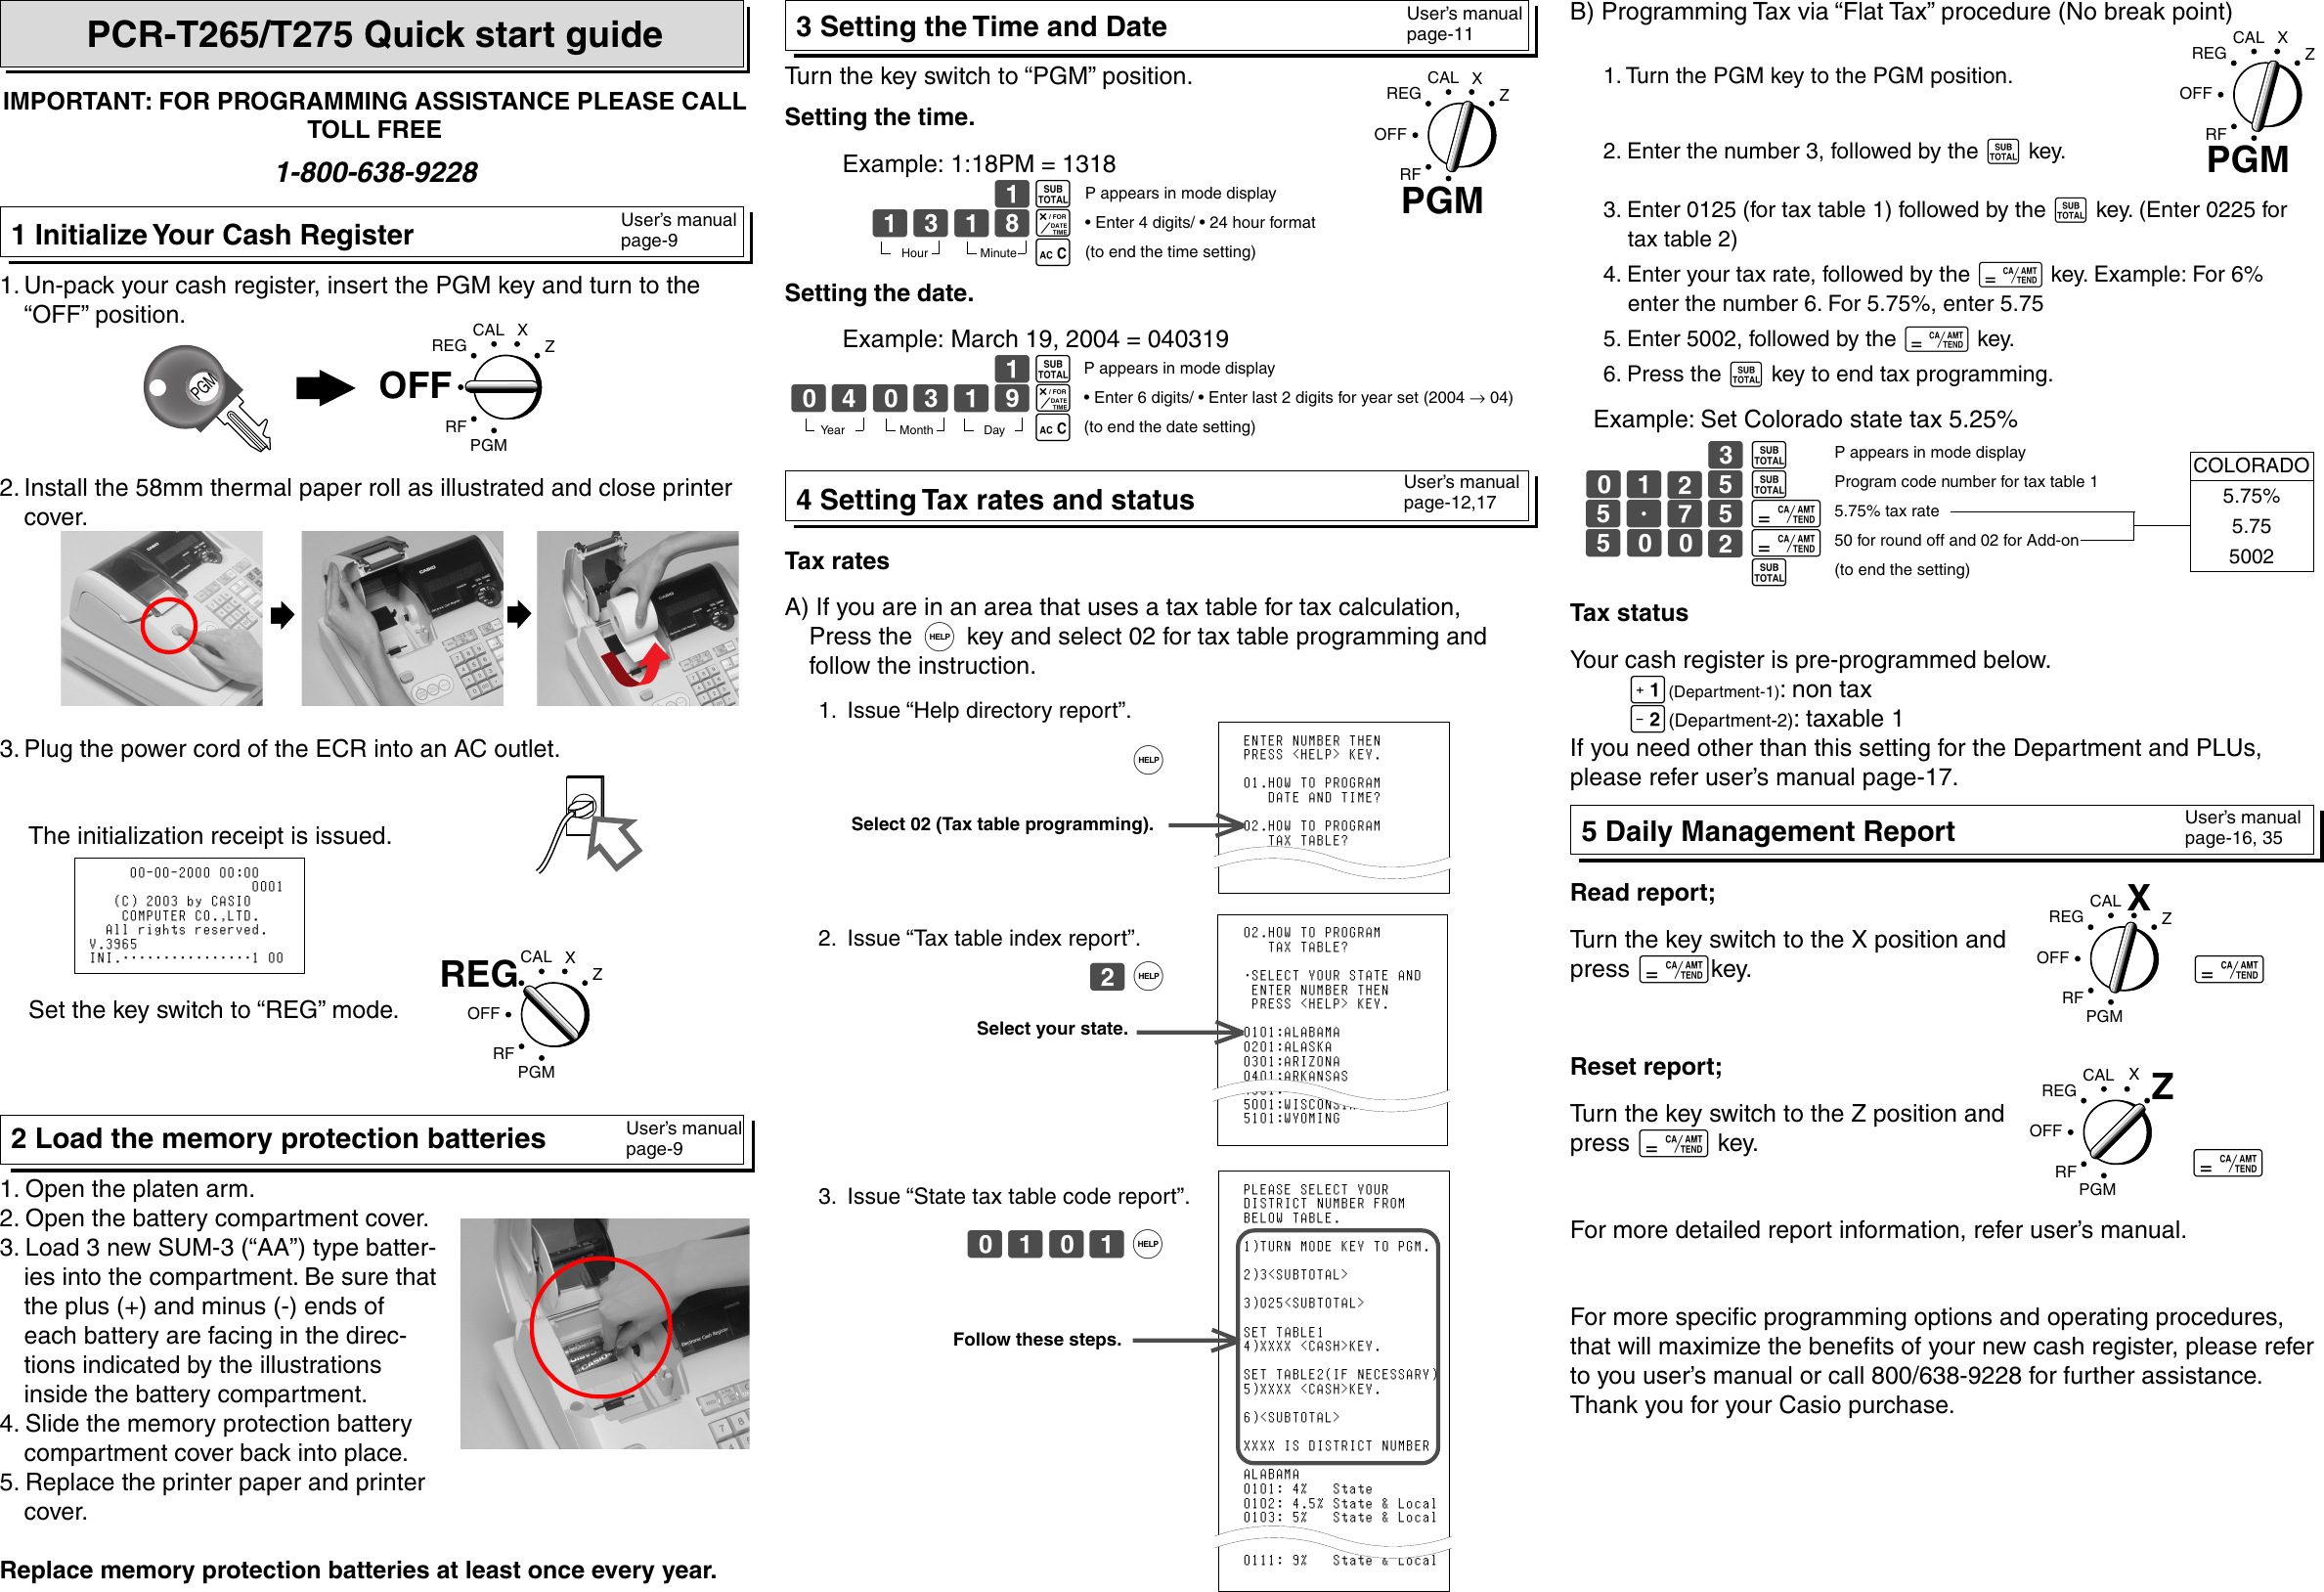 Casio PCR T265 QuickStartGuide_270.p65 User Manual To The 476ee3c7 ...